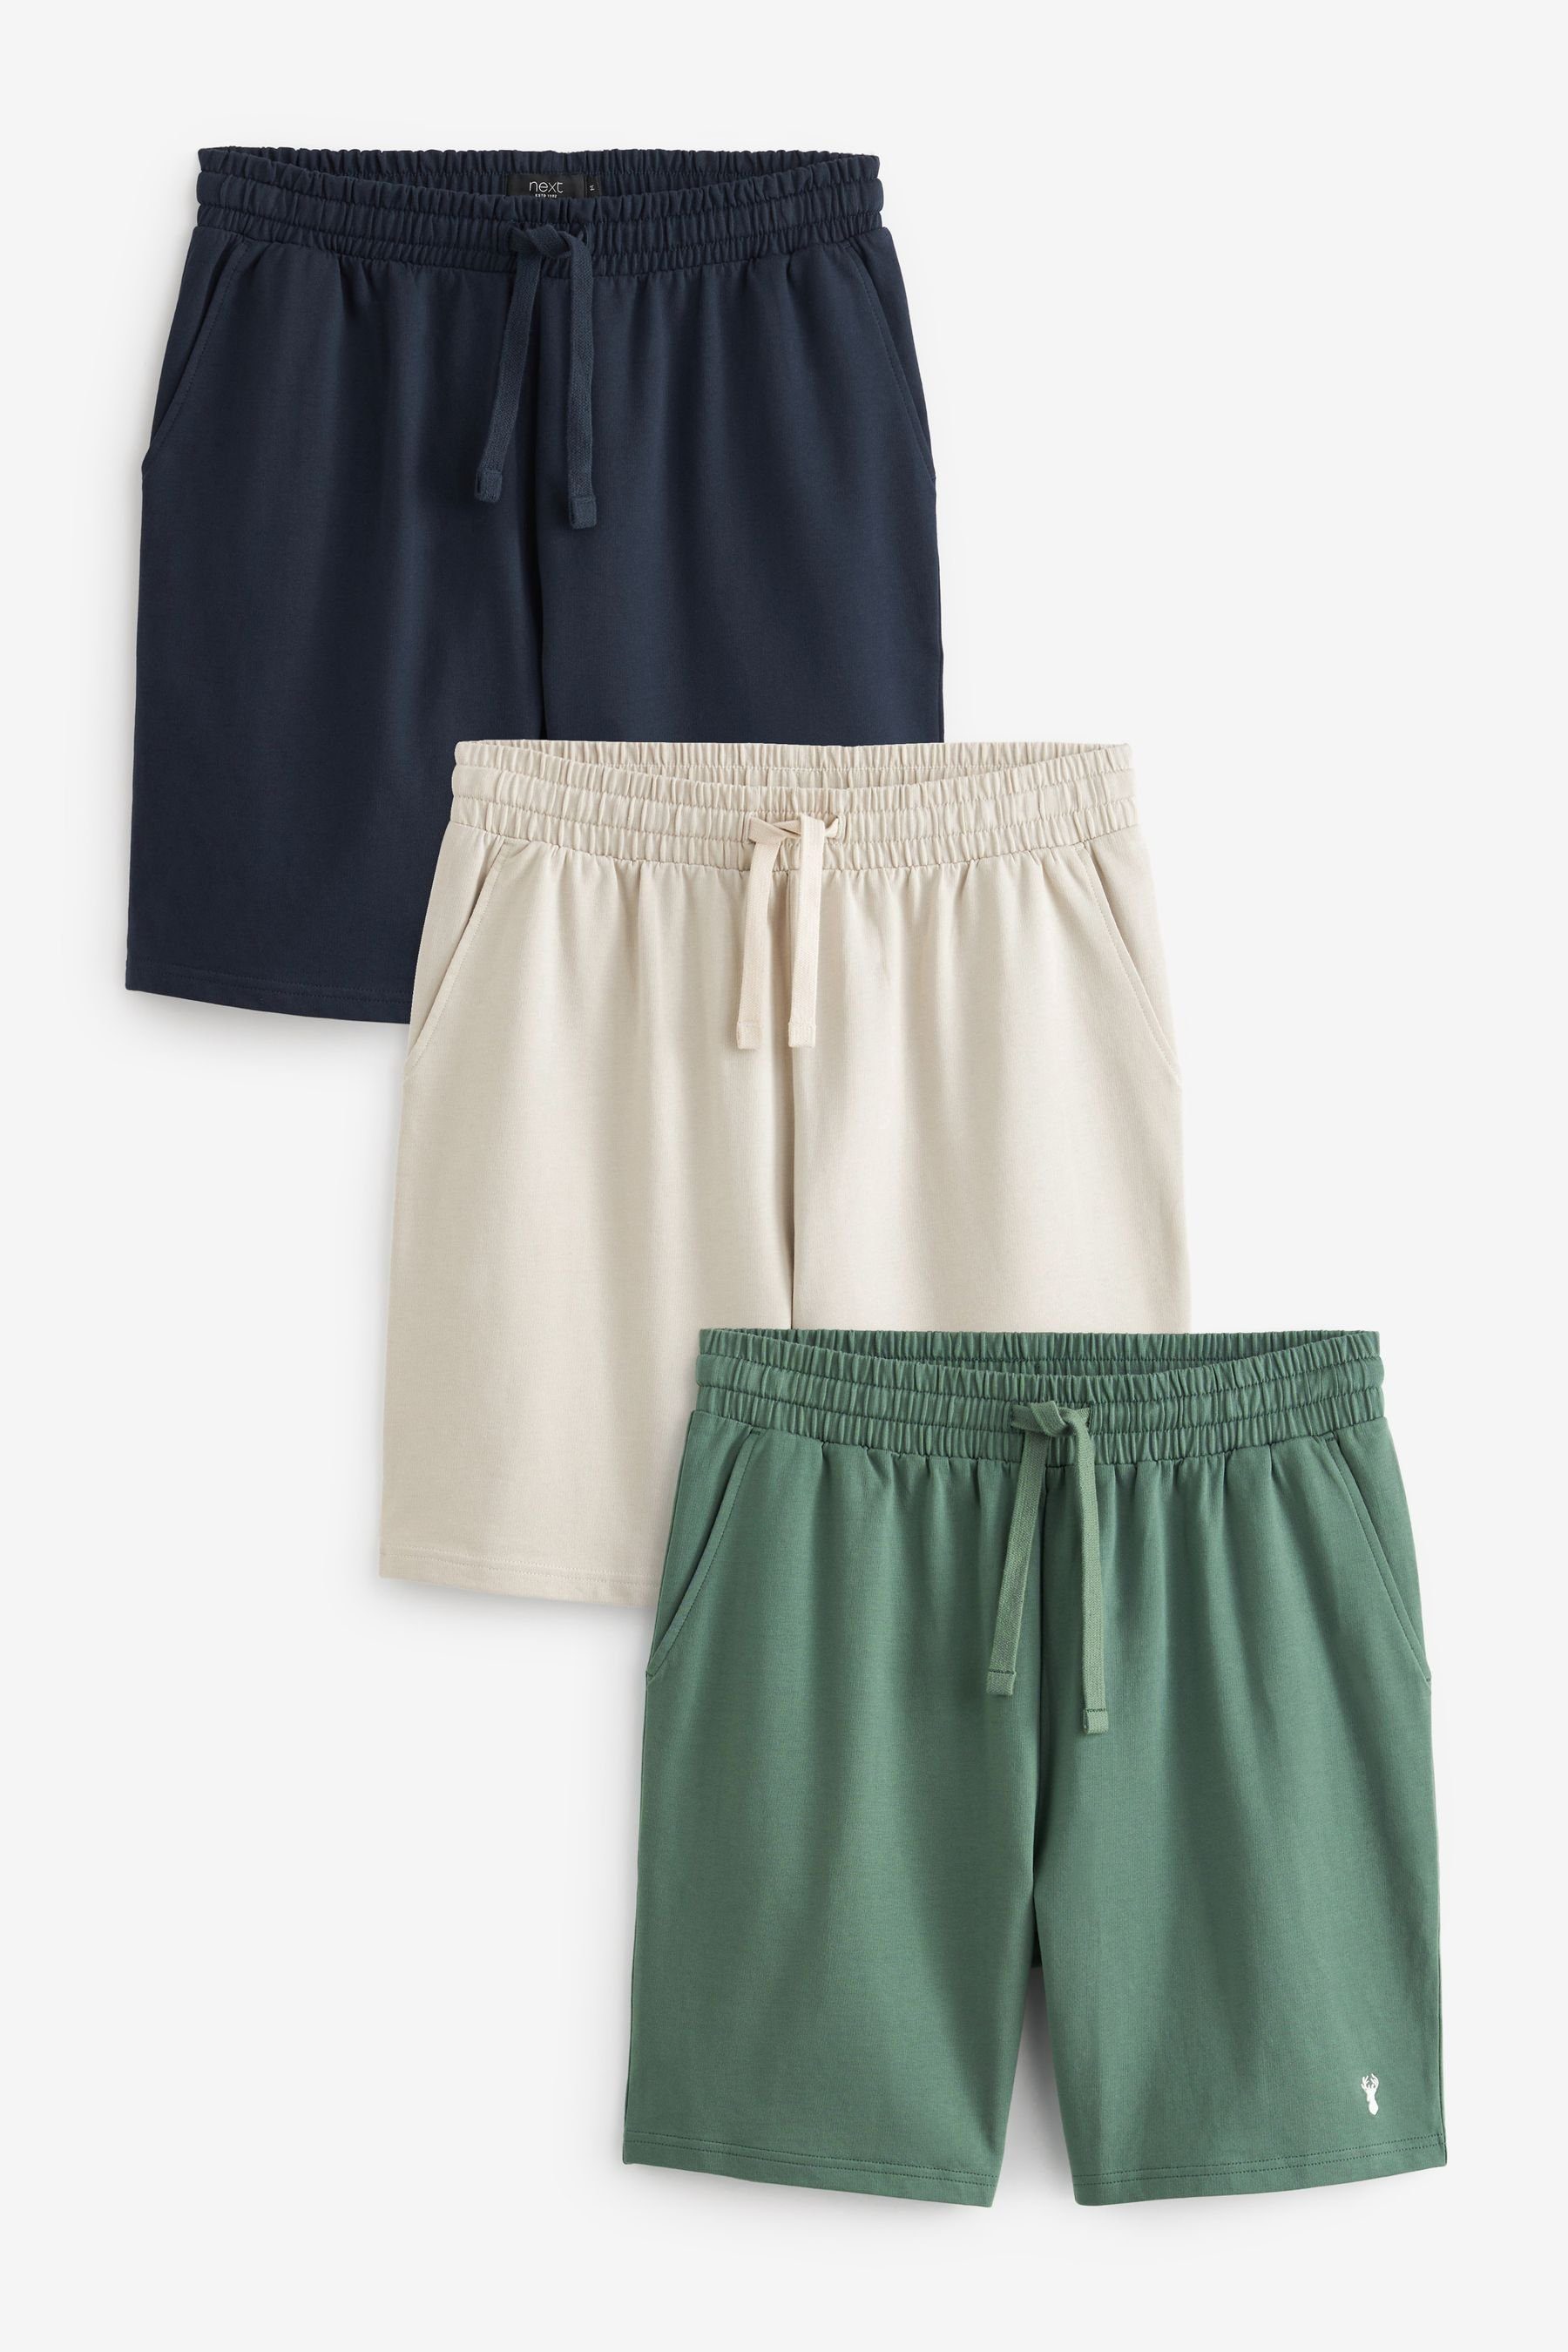 Next Schlafshorts Leichte Shorts, 3er-Pack (3-tlg) Blue/Stone/Green